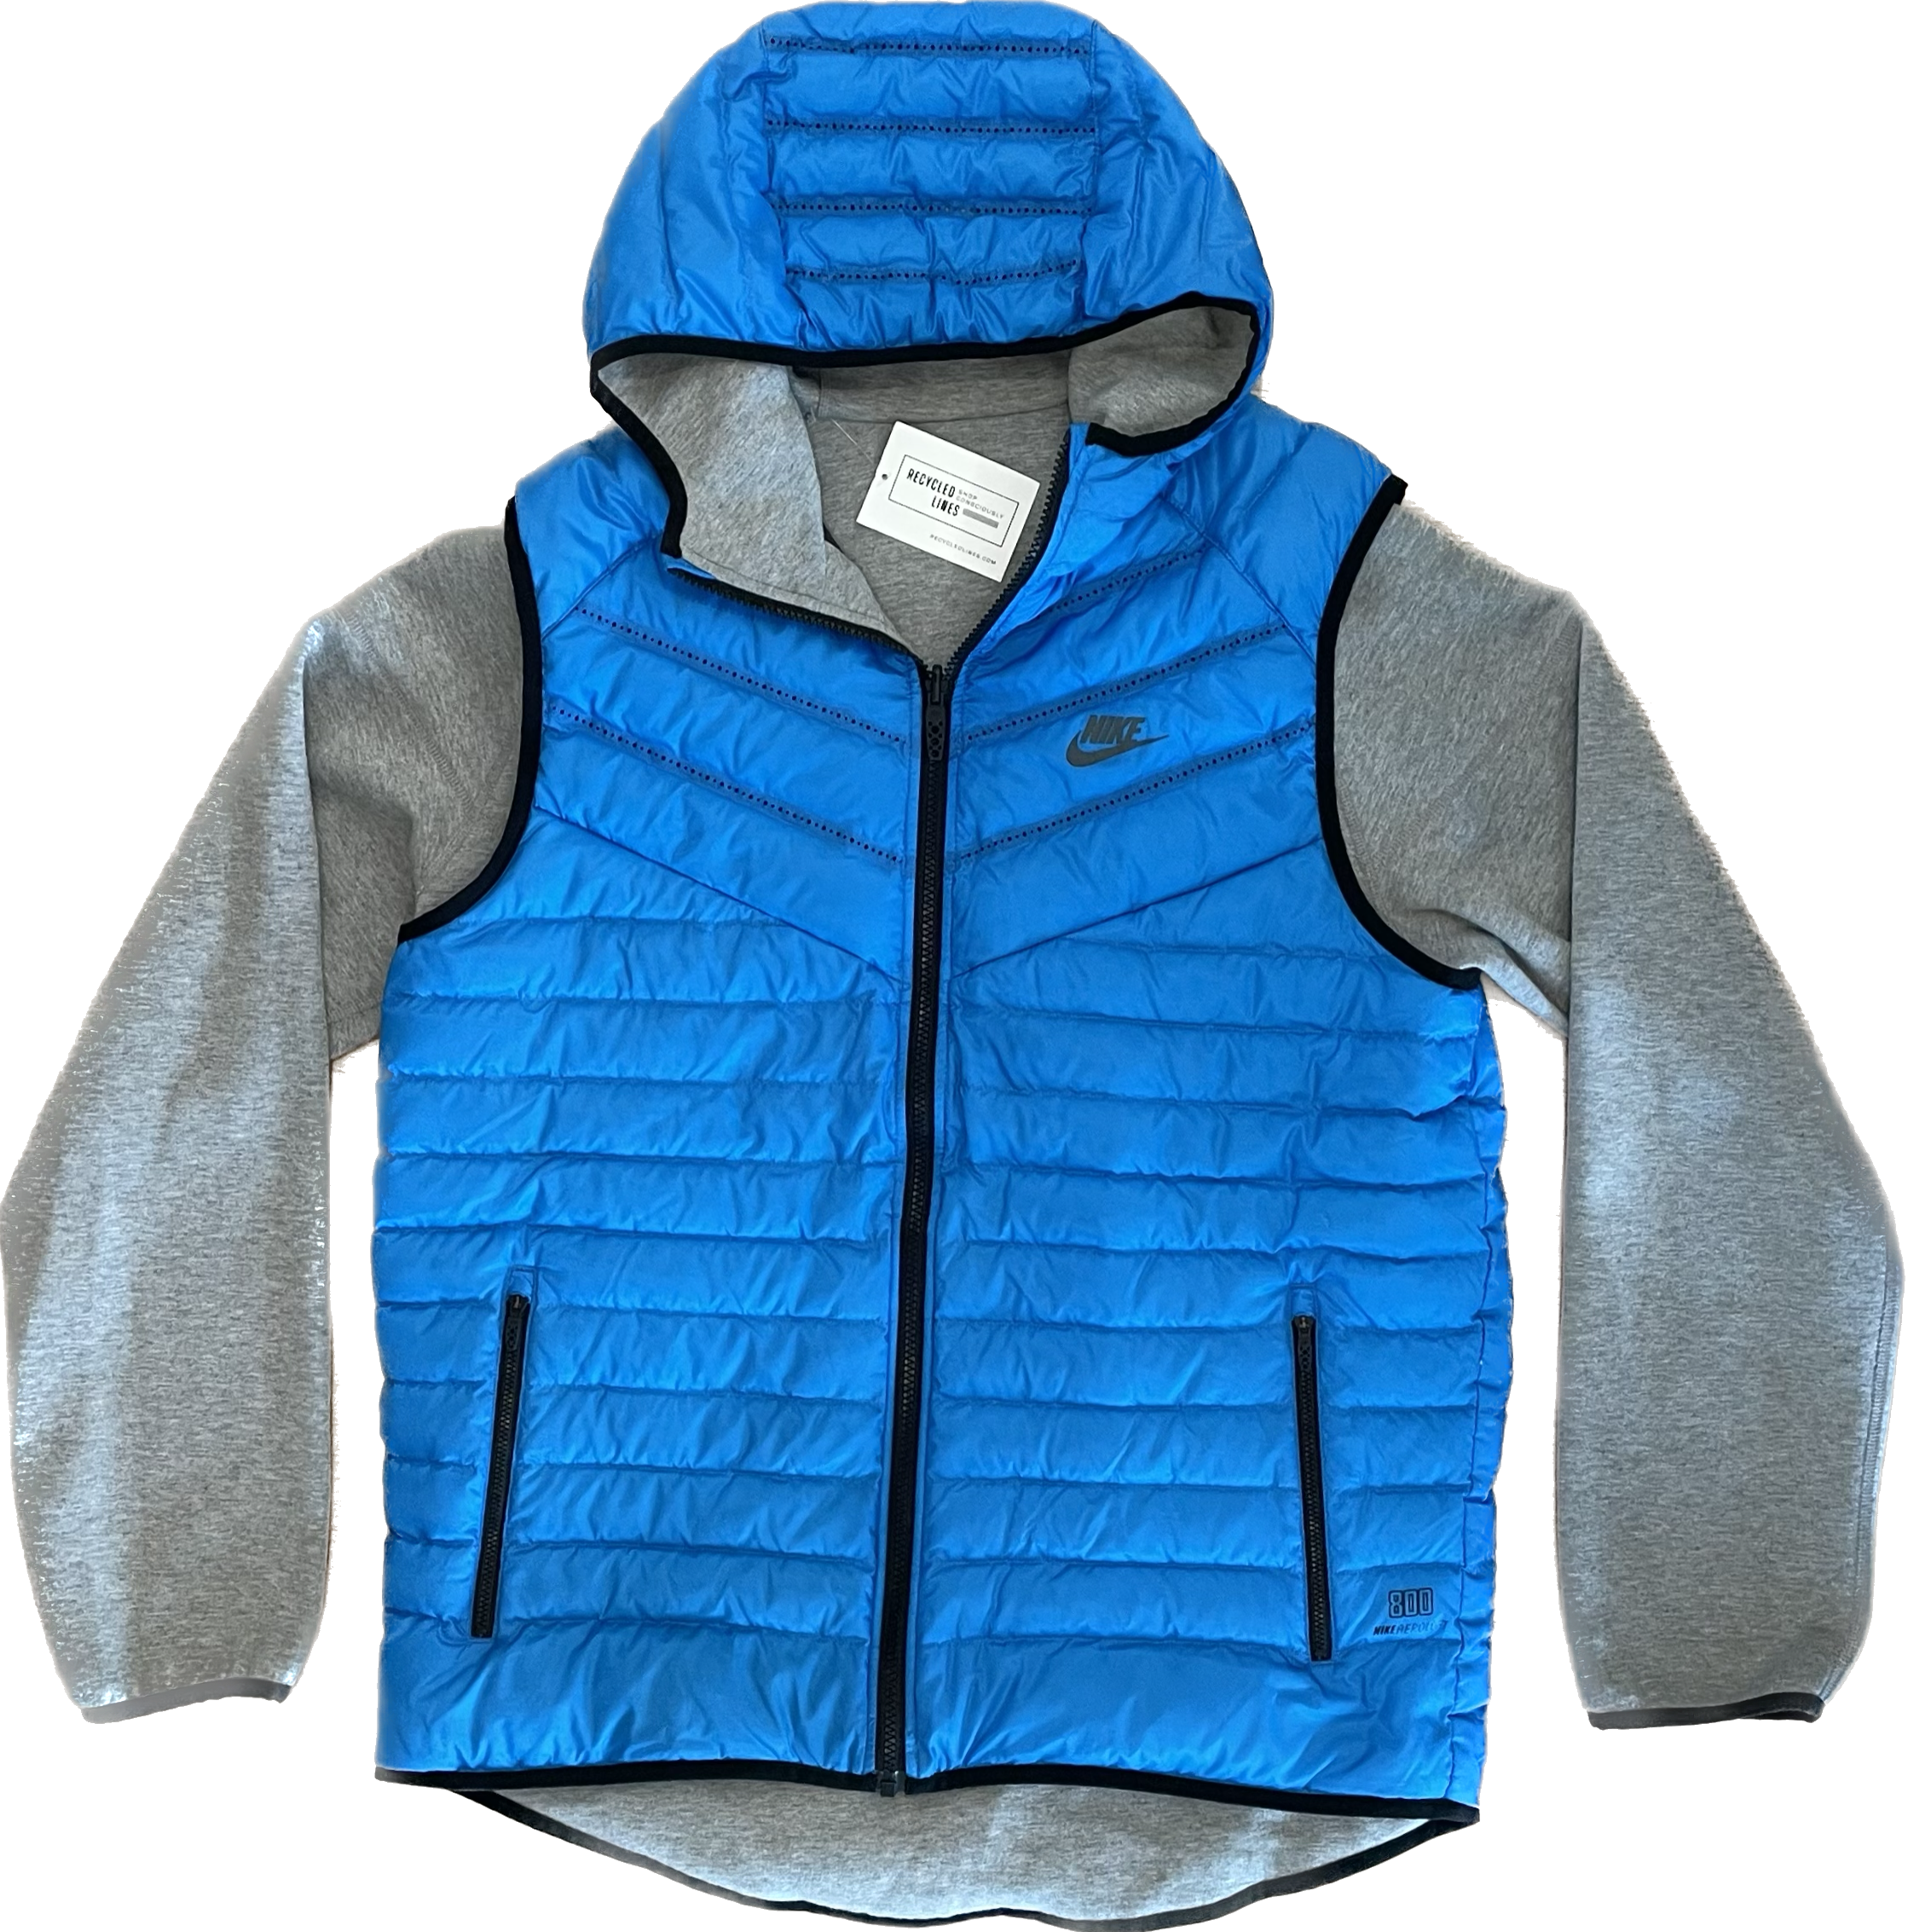 Nike 800 Aeroloft Jacket, Blue/Gray Mens Size L